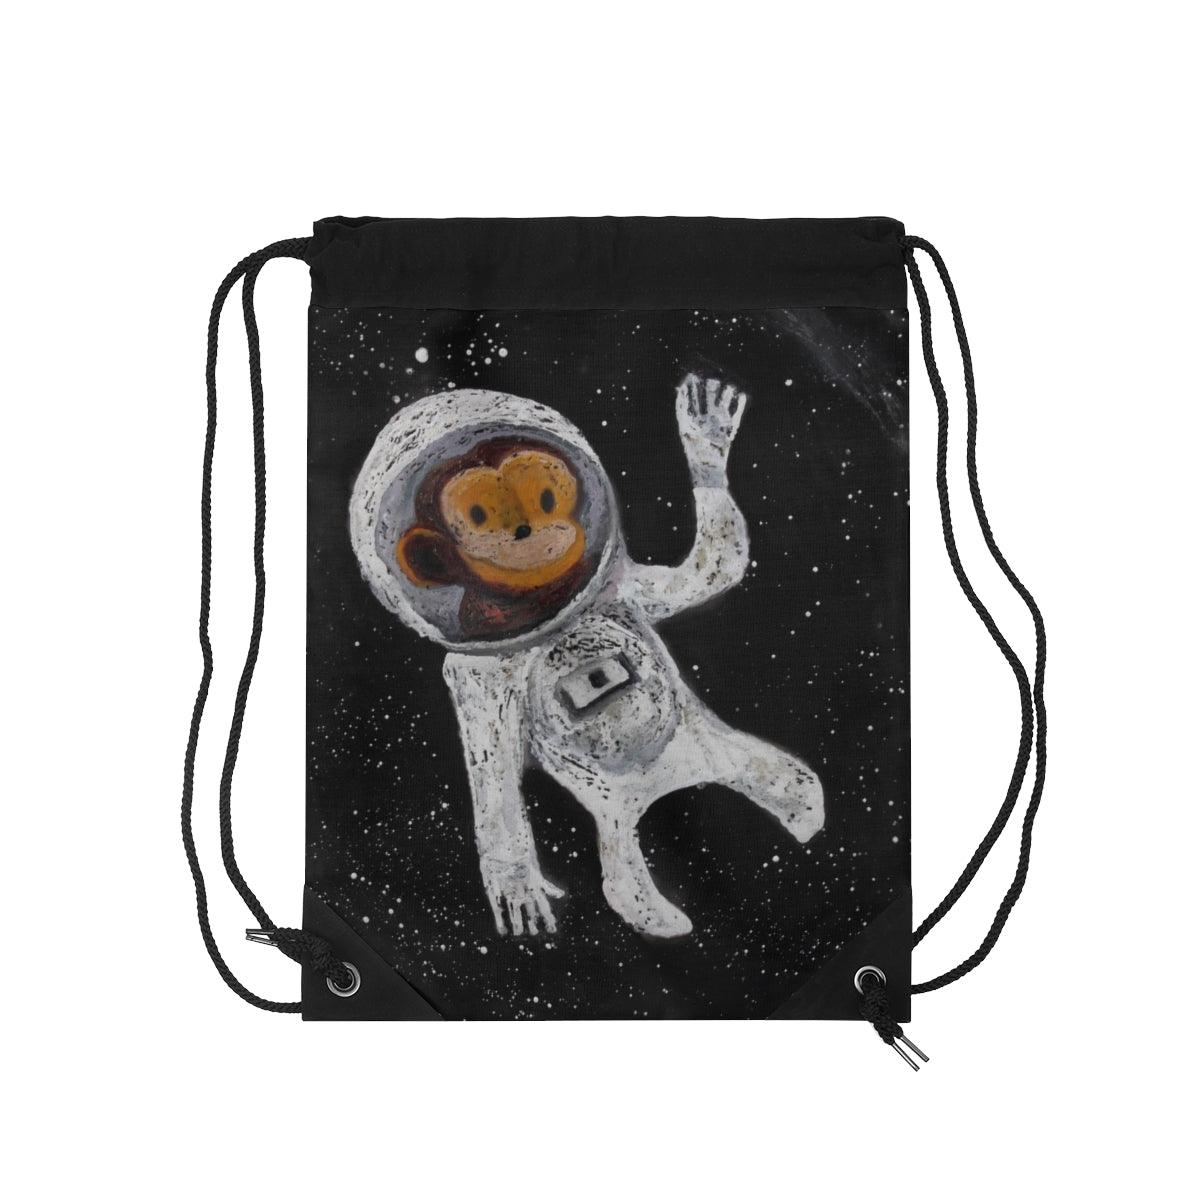 "Space Chimp" Drawstring Bag-Bags - Mike Giannella - Encaustic Painting - Mixed Media Artist - Art Prints